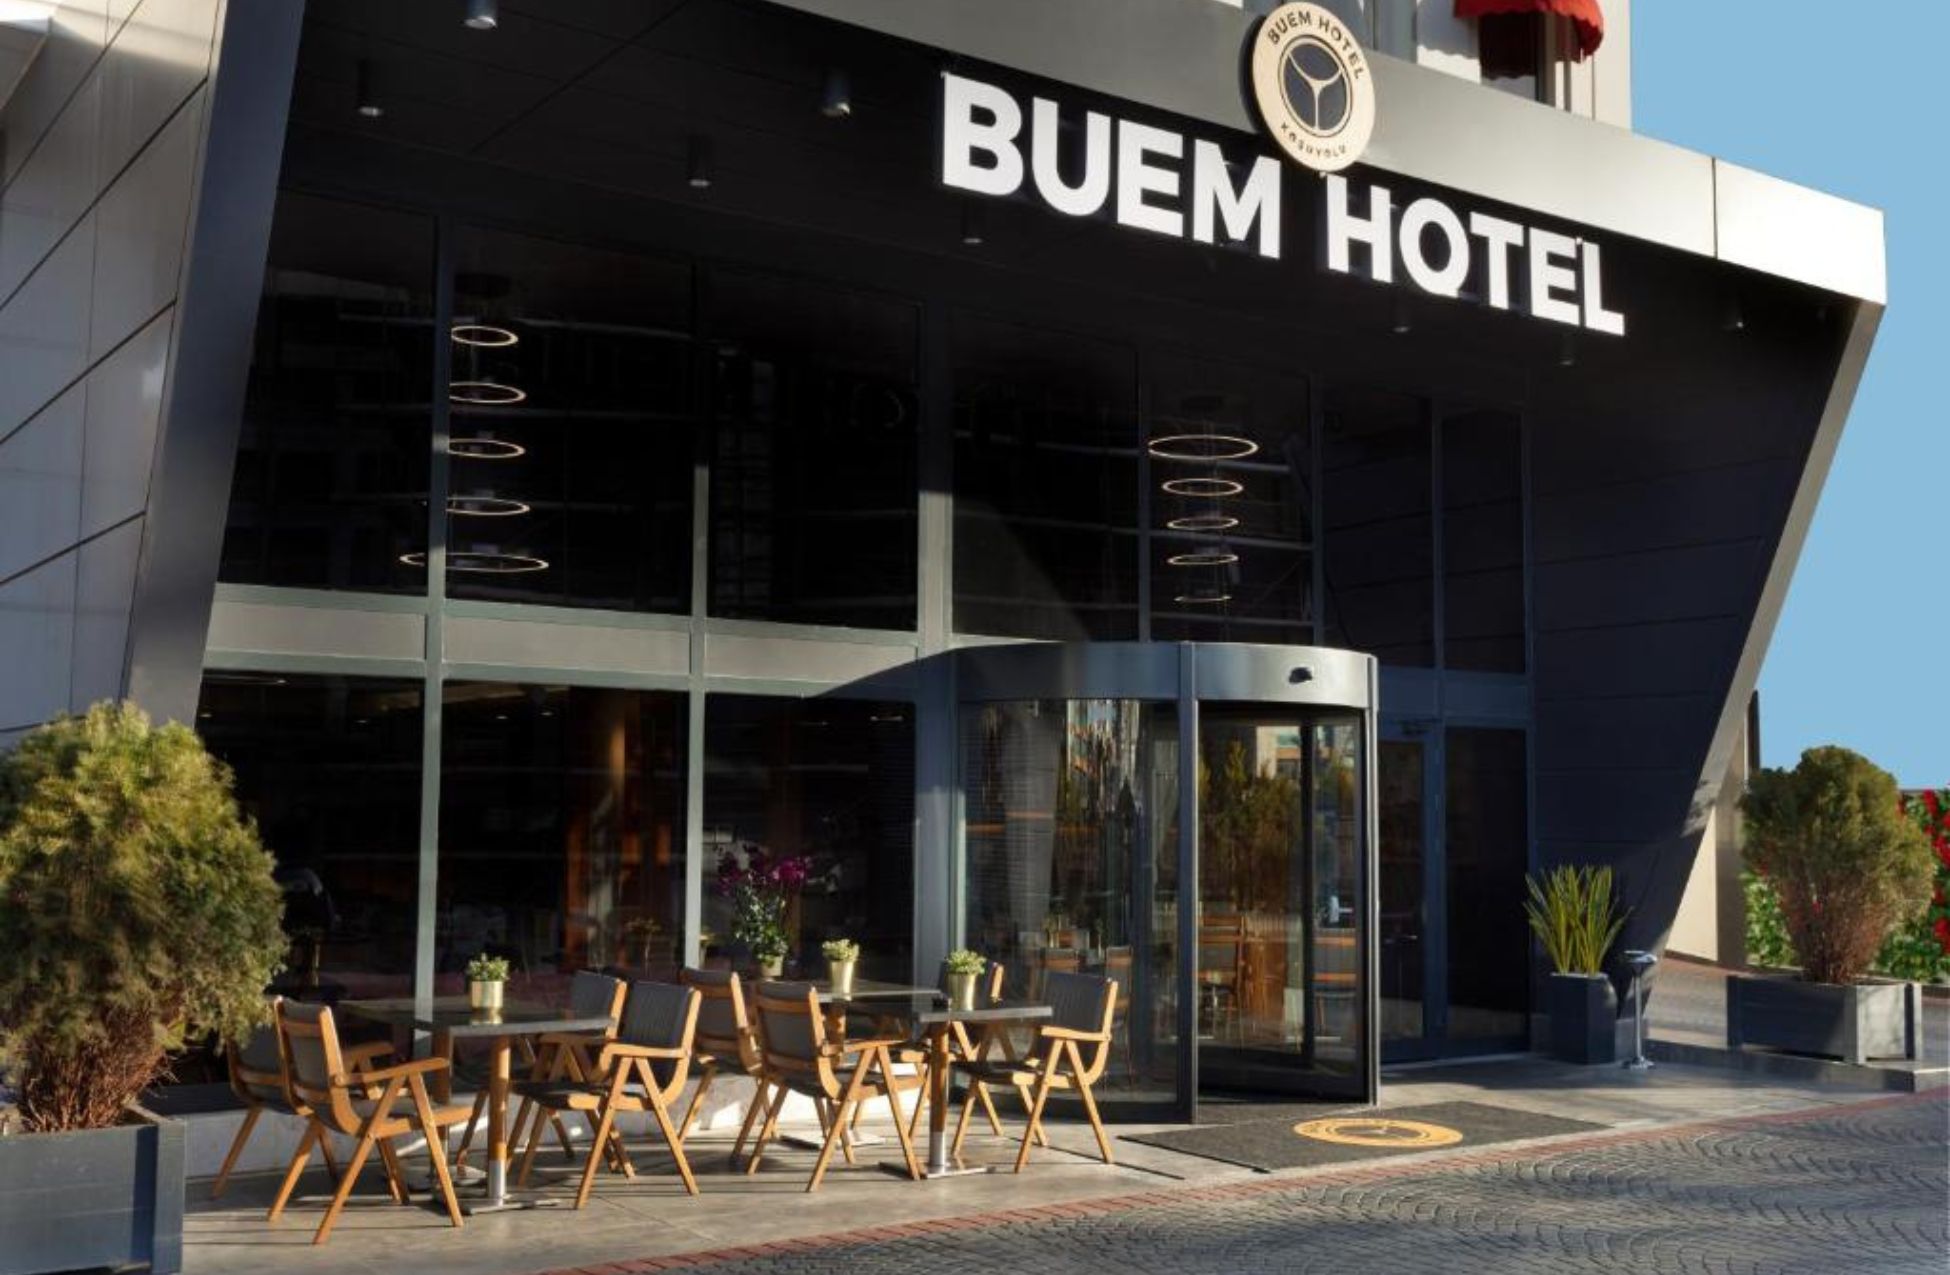 Buem Hotel - Best Hotels In Istanbul